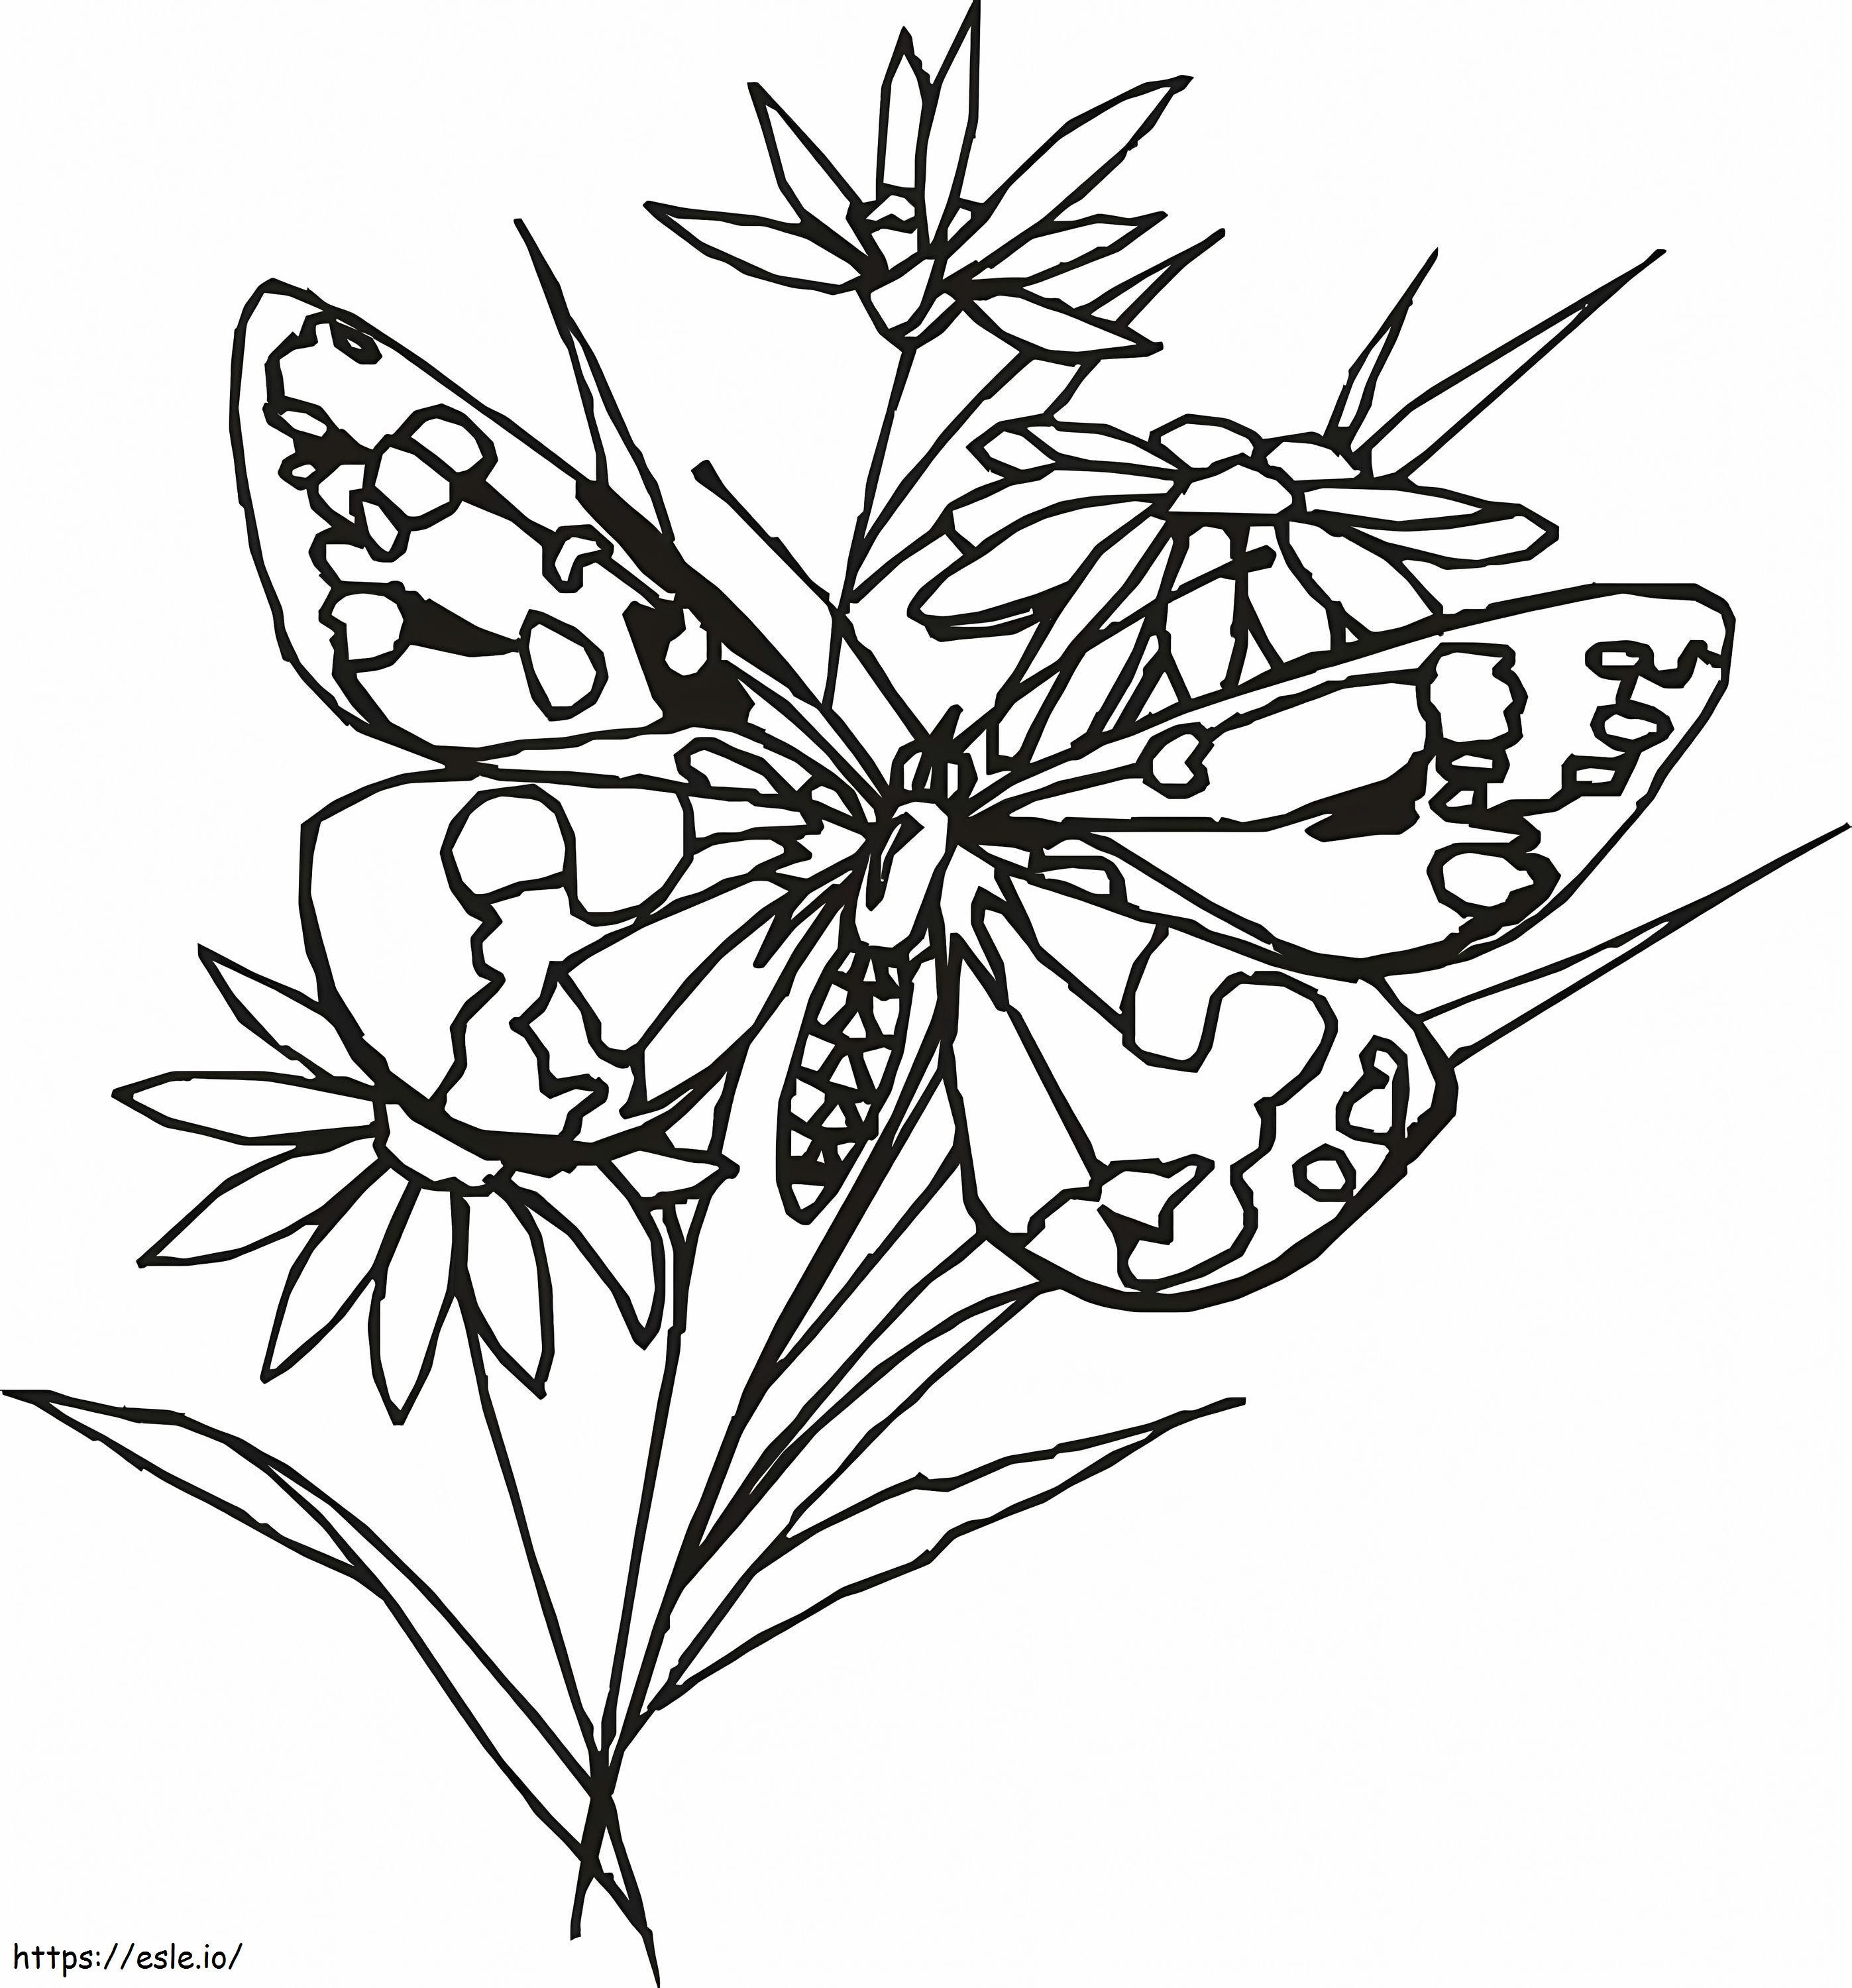 Papillon 1 1 coloring page